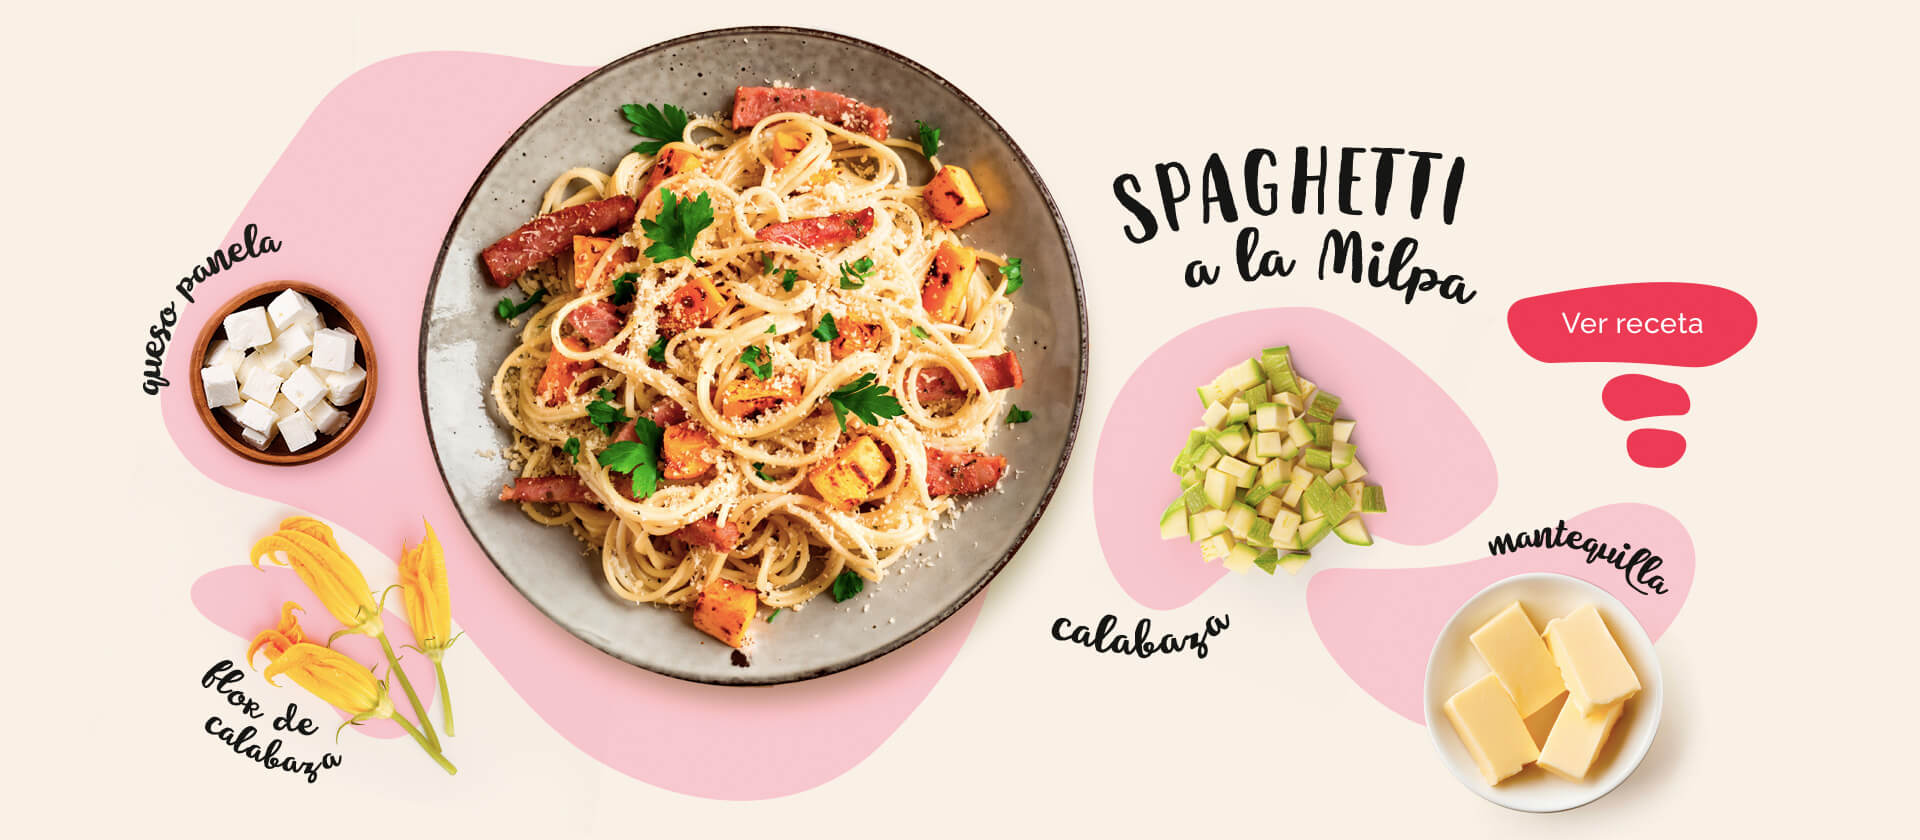 Spaguetti a la Milpa